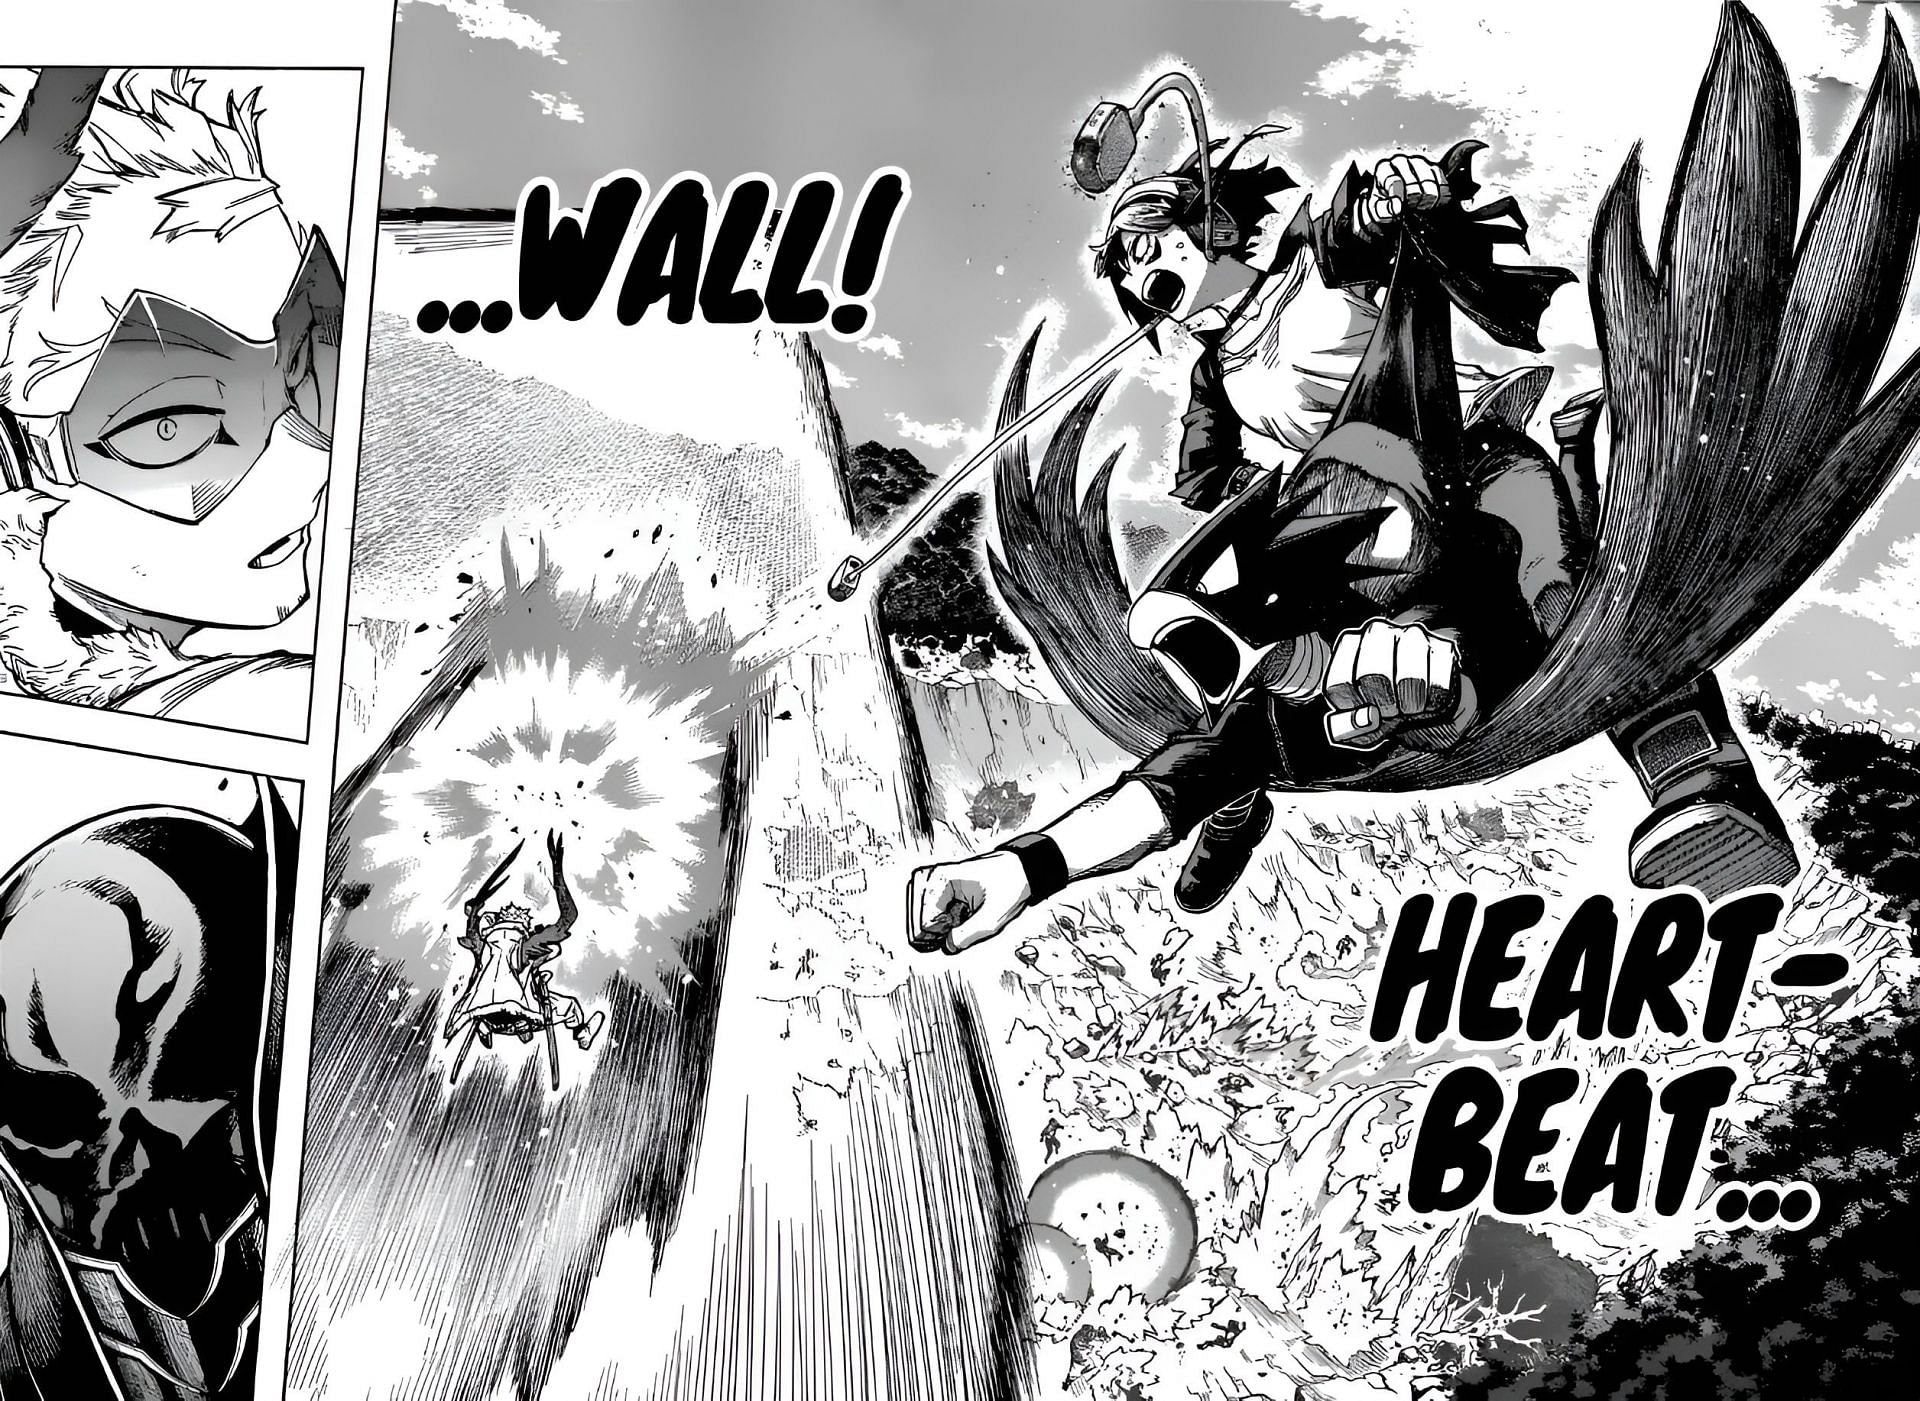 Jirou&#039;s Heartbeat Wall in My Hero Academia chapter 354 (Image via Shueisha)